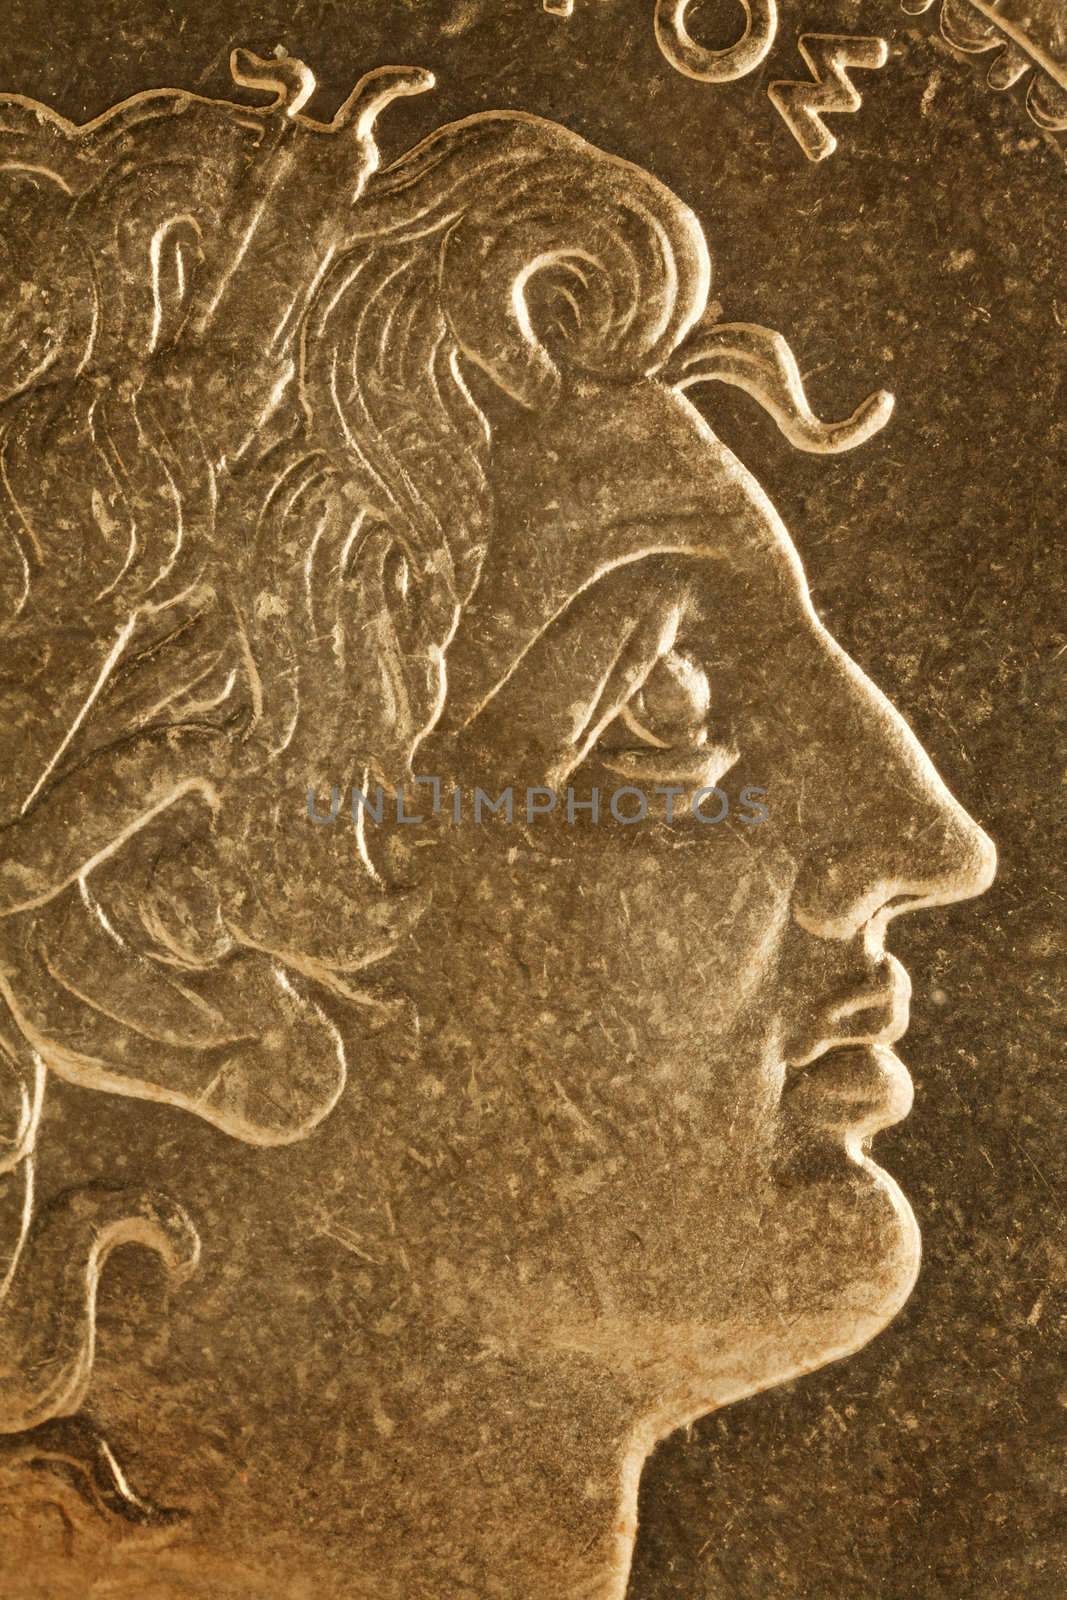 Alexander the Great portrait by PixelsAway